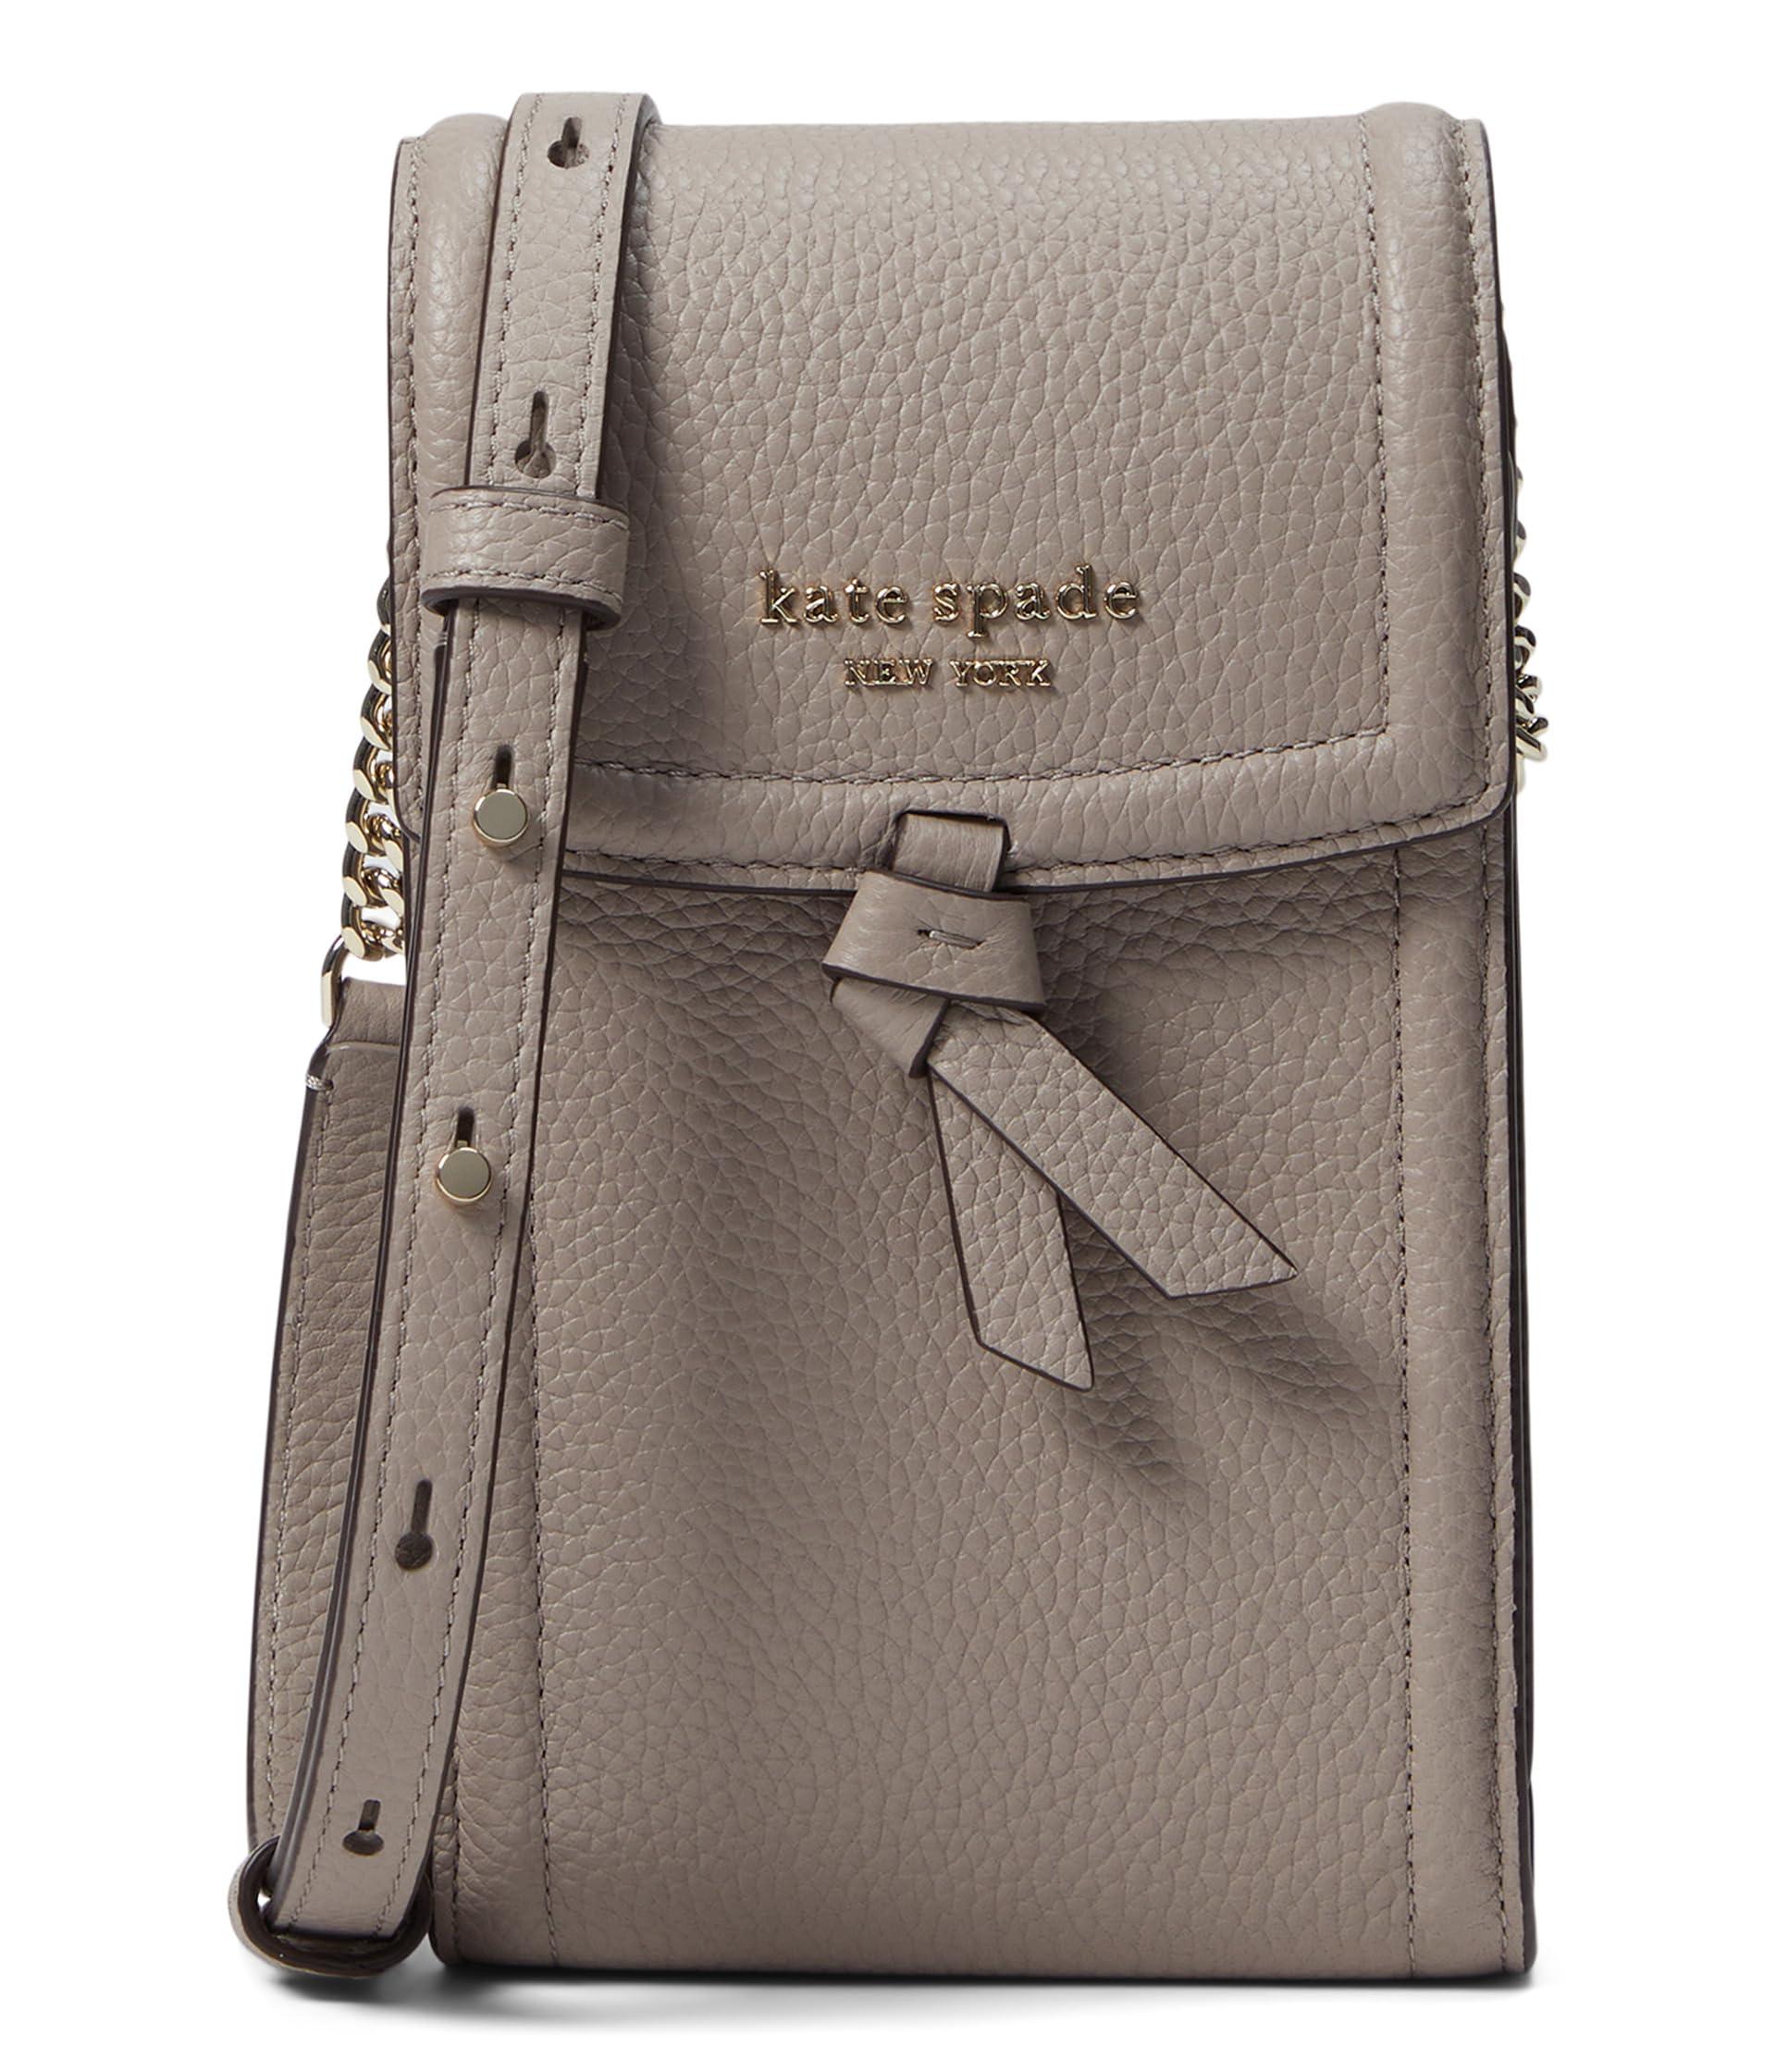 kate spade new york Knott Leather Phone Crossbody Bag